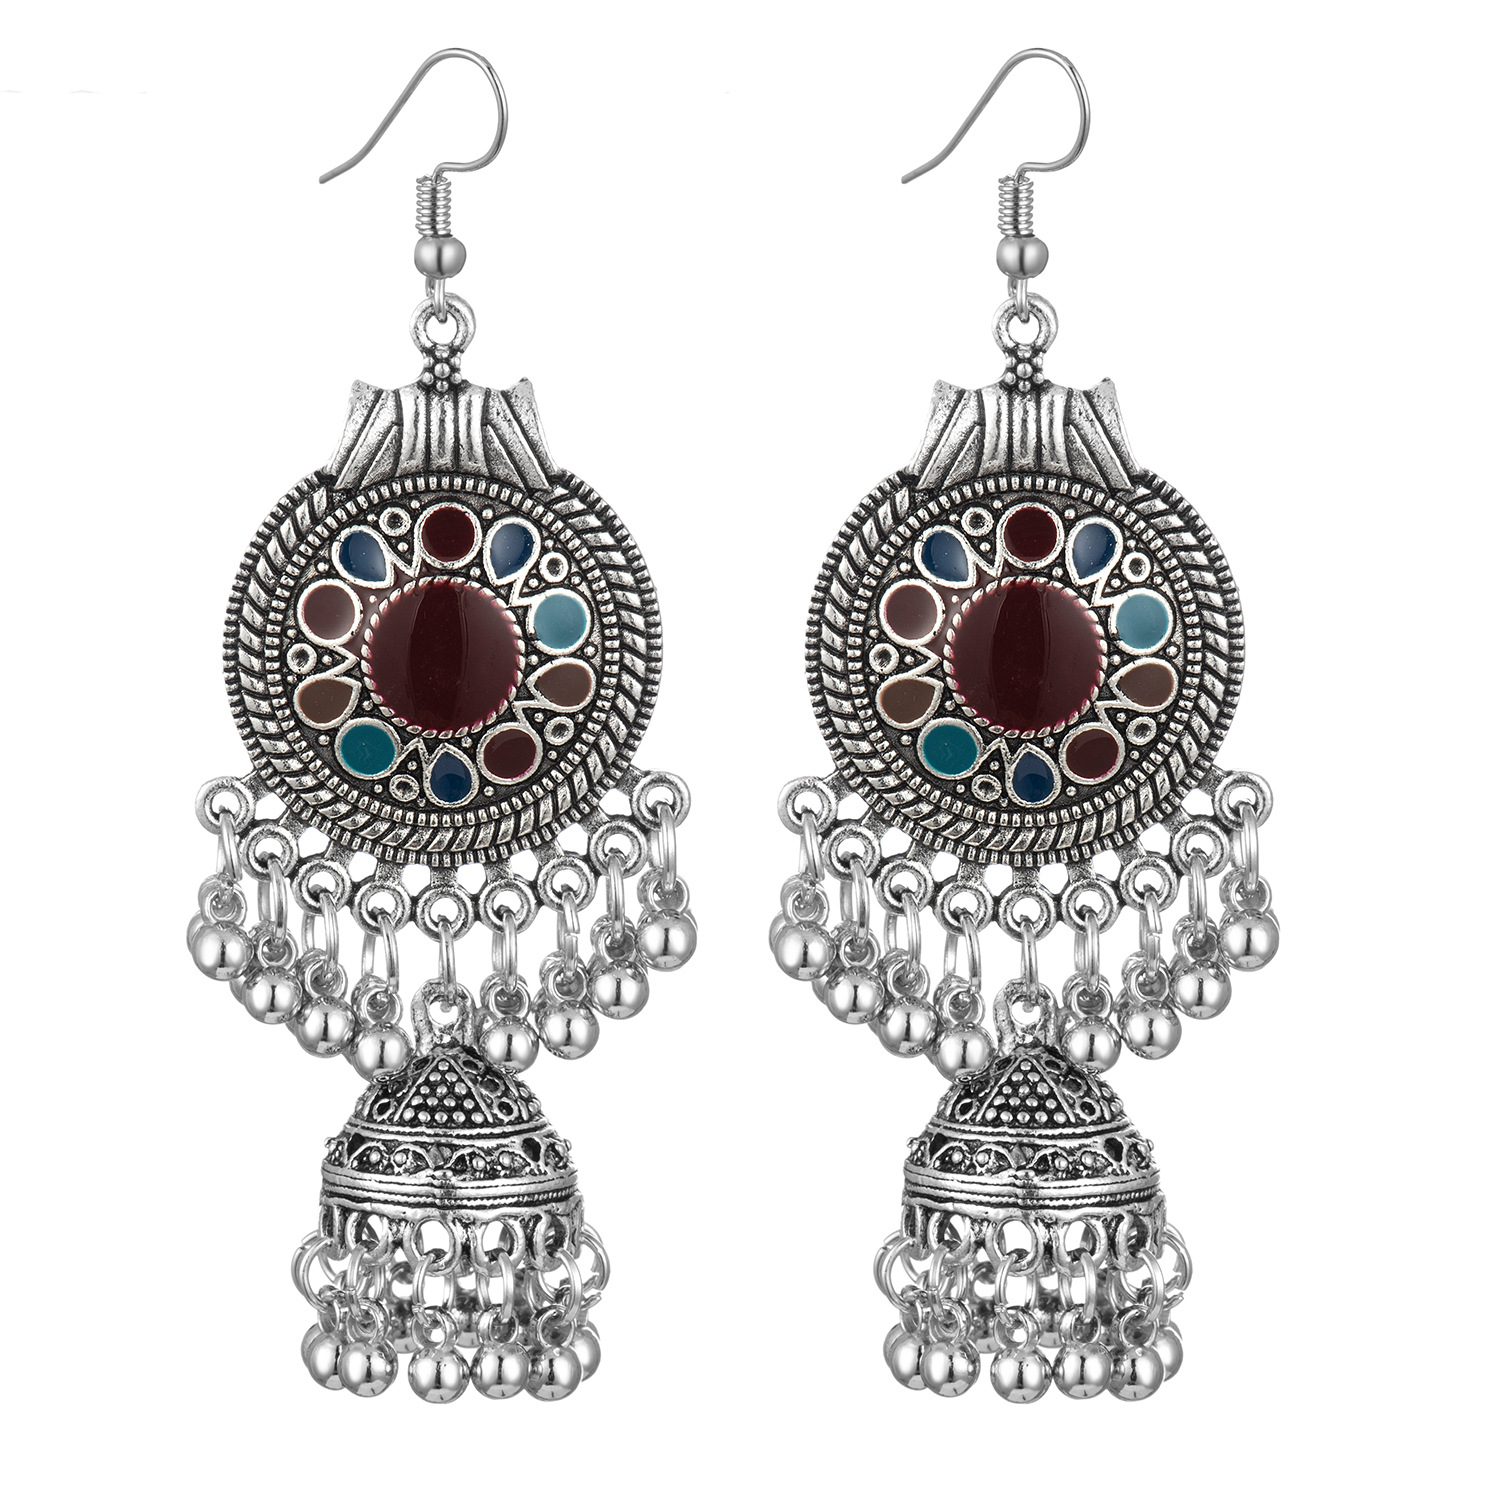 Rush Indian Jewelry Vintage Round Earrings Boho Antique Ethnic Gypsy Bells Pendant Earrings Women's Pendant S838 - image 1 of 1